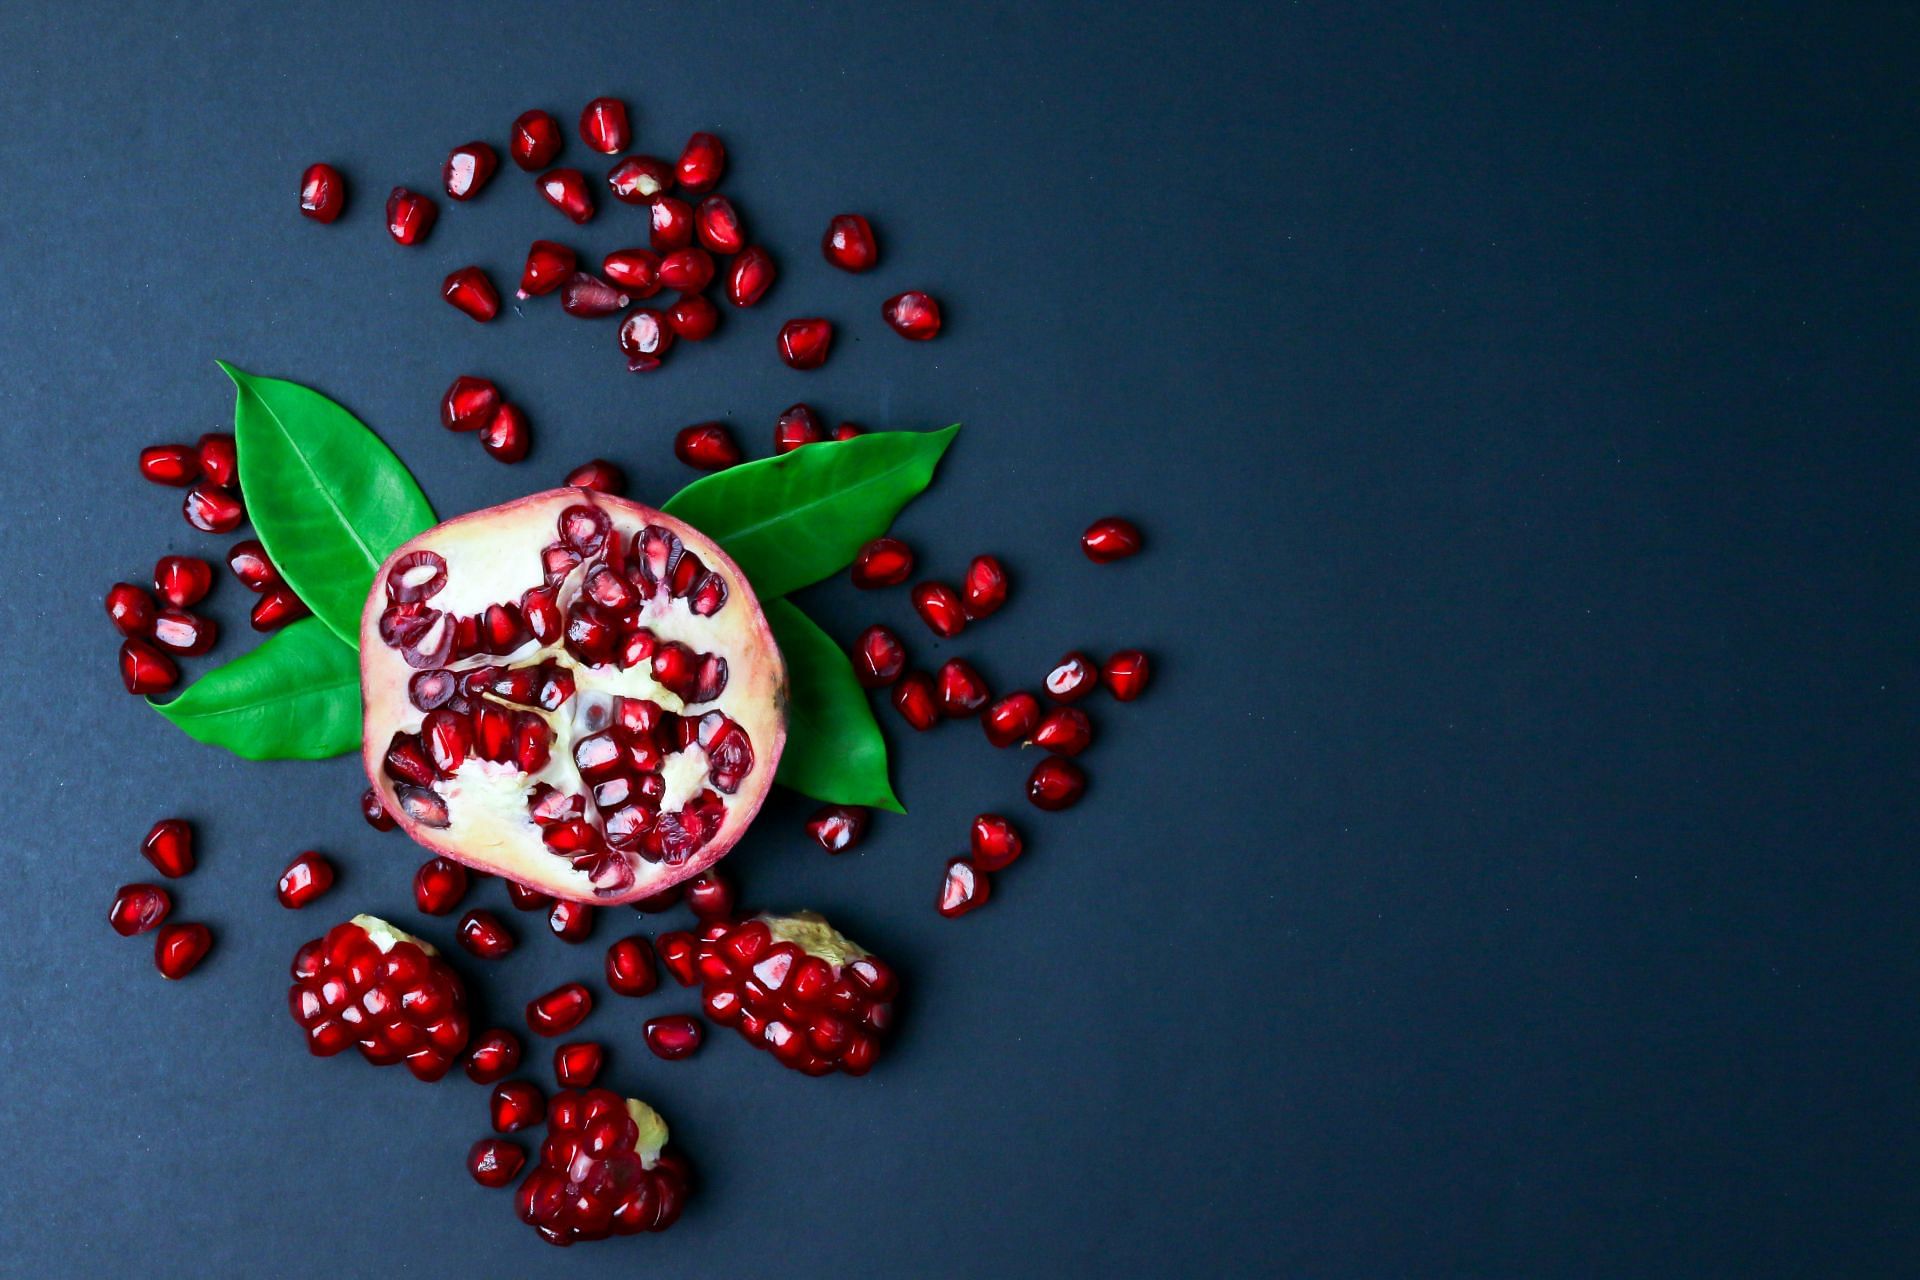 Pomegranate salad recipes for a healthy winter (Image via Unsplash/Tamanna Rumee)